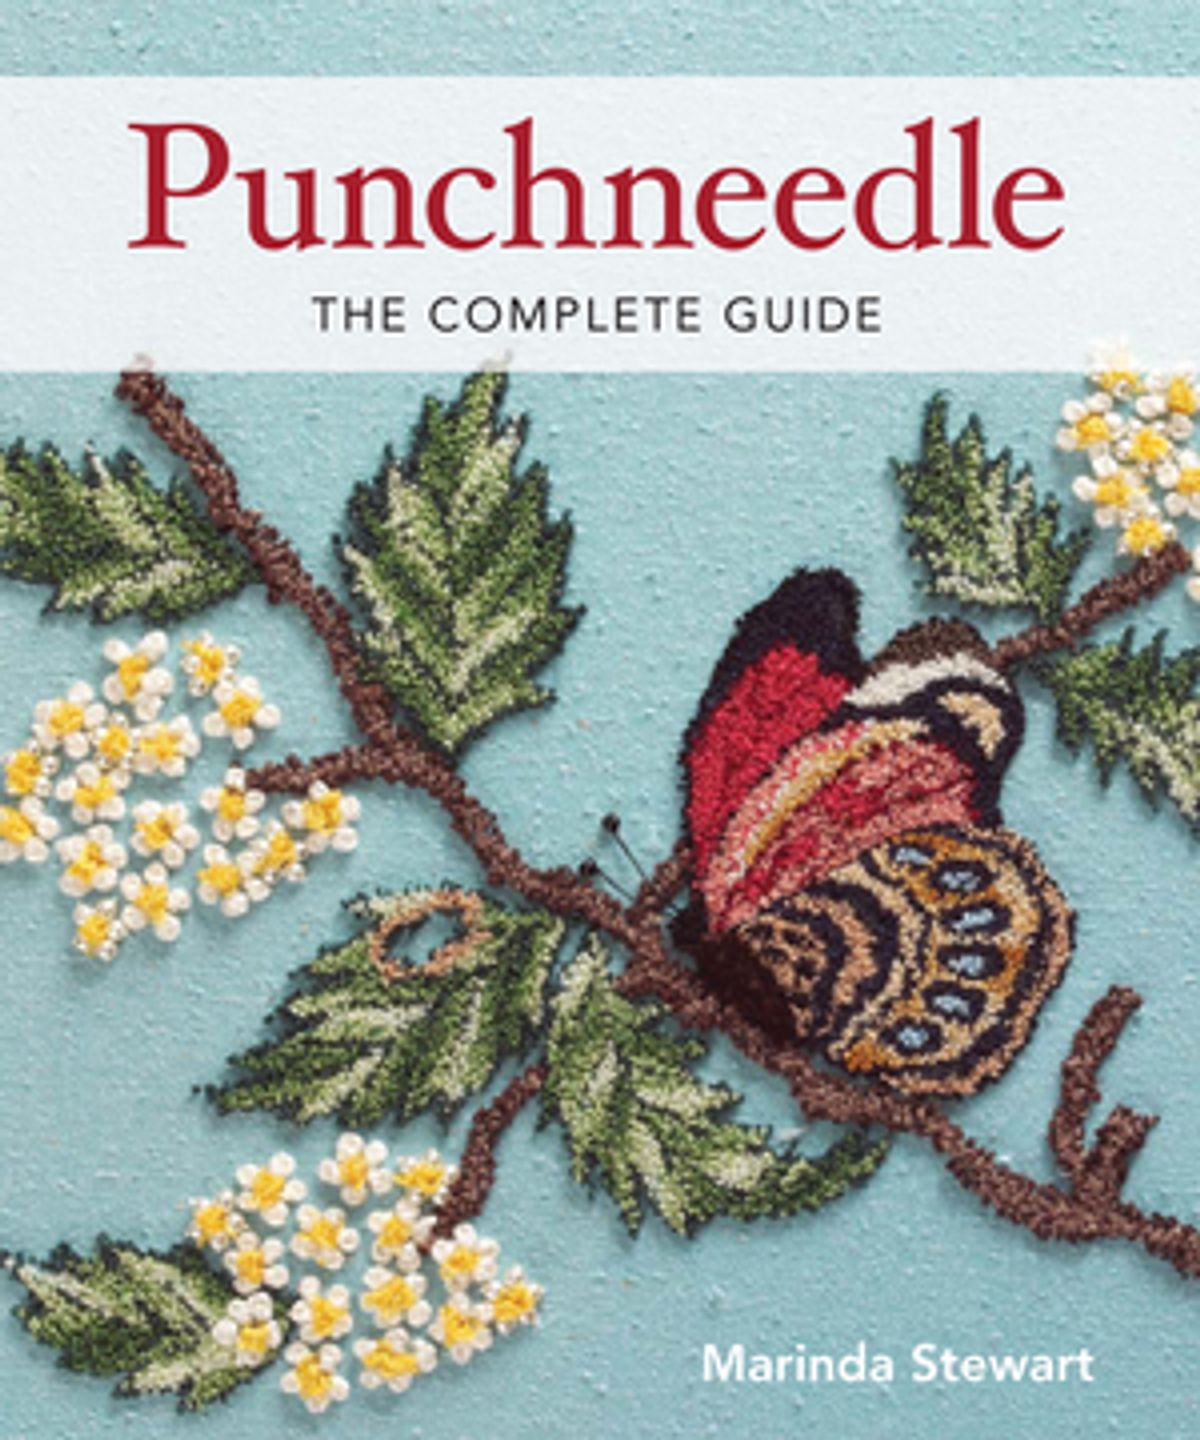 Punch Needle Embroidery Patterns Punchneedle The Complete Guide Ebook Marinda Stewart Rakuten Kobo